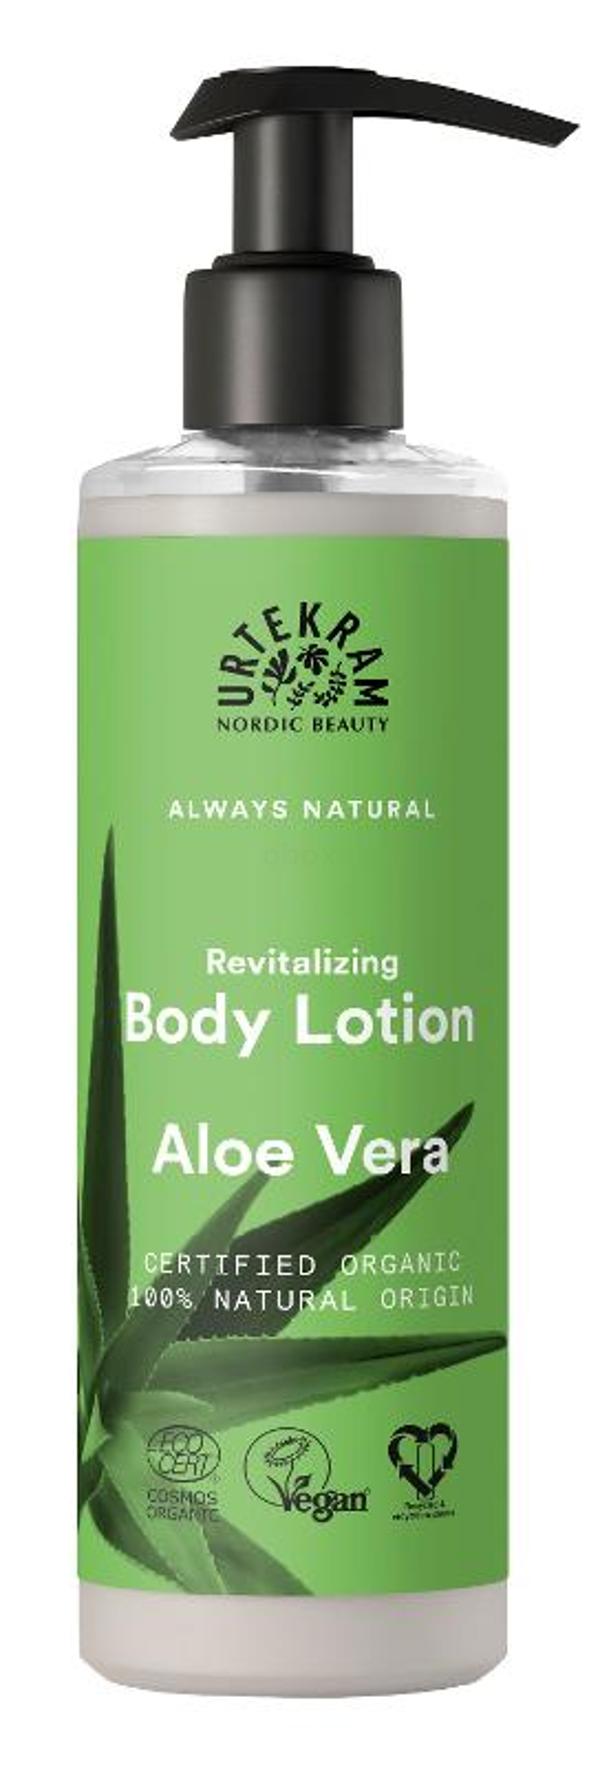 Produktfoto zu Revitalizing Body Lotion Aloe